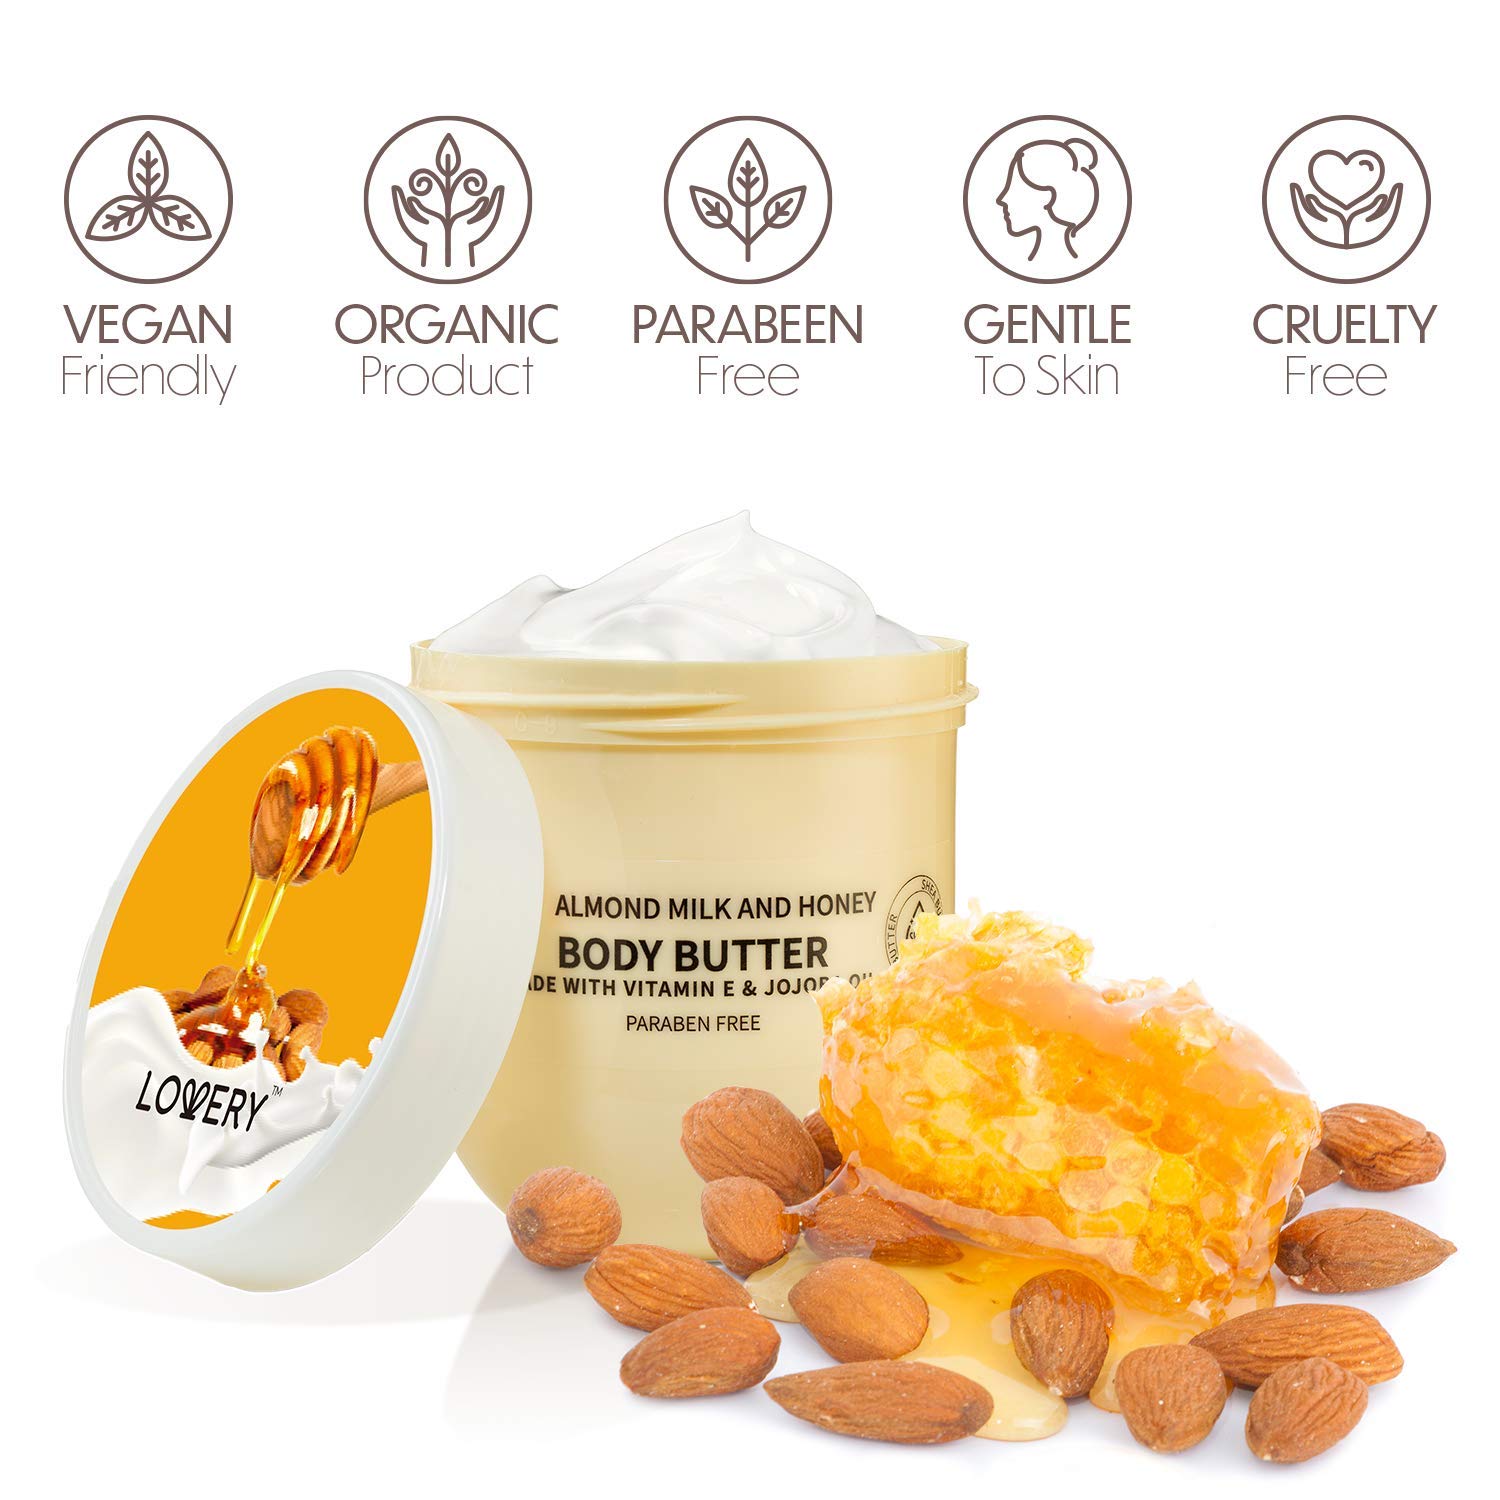 Almond Milk Creamy Body Lotion | Trending